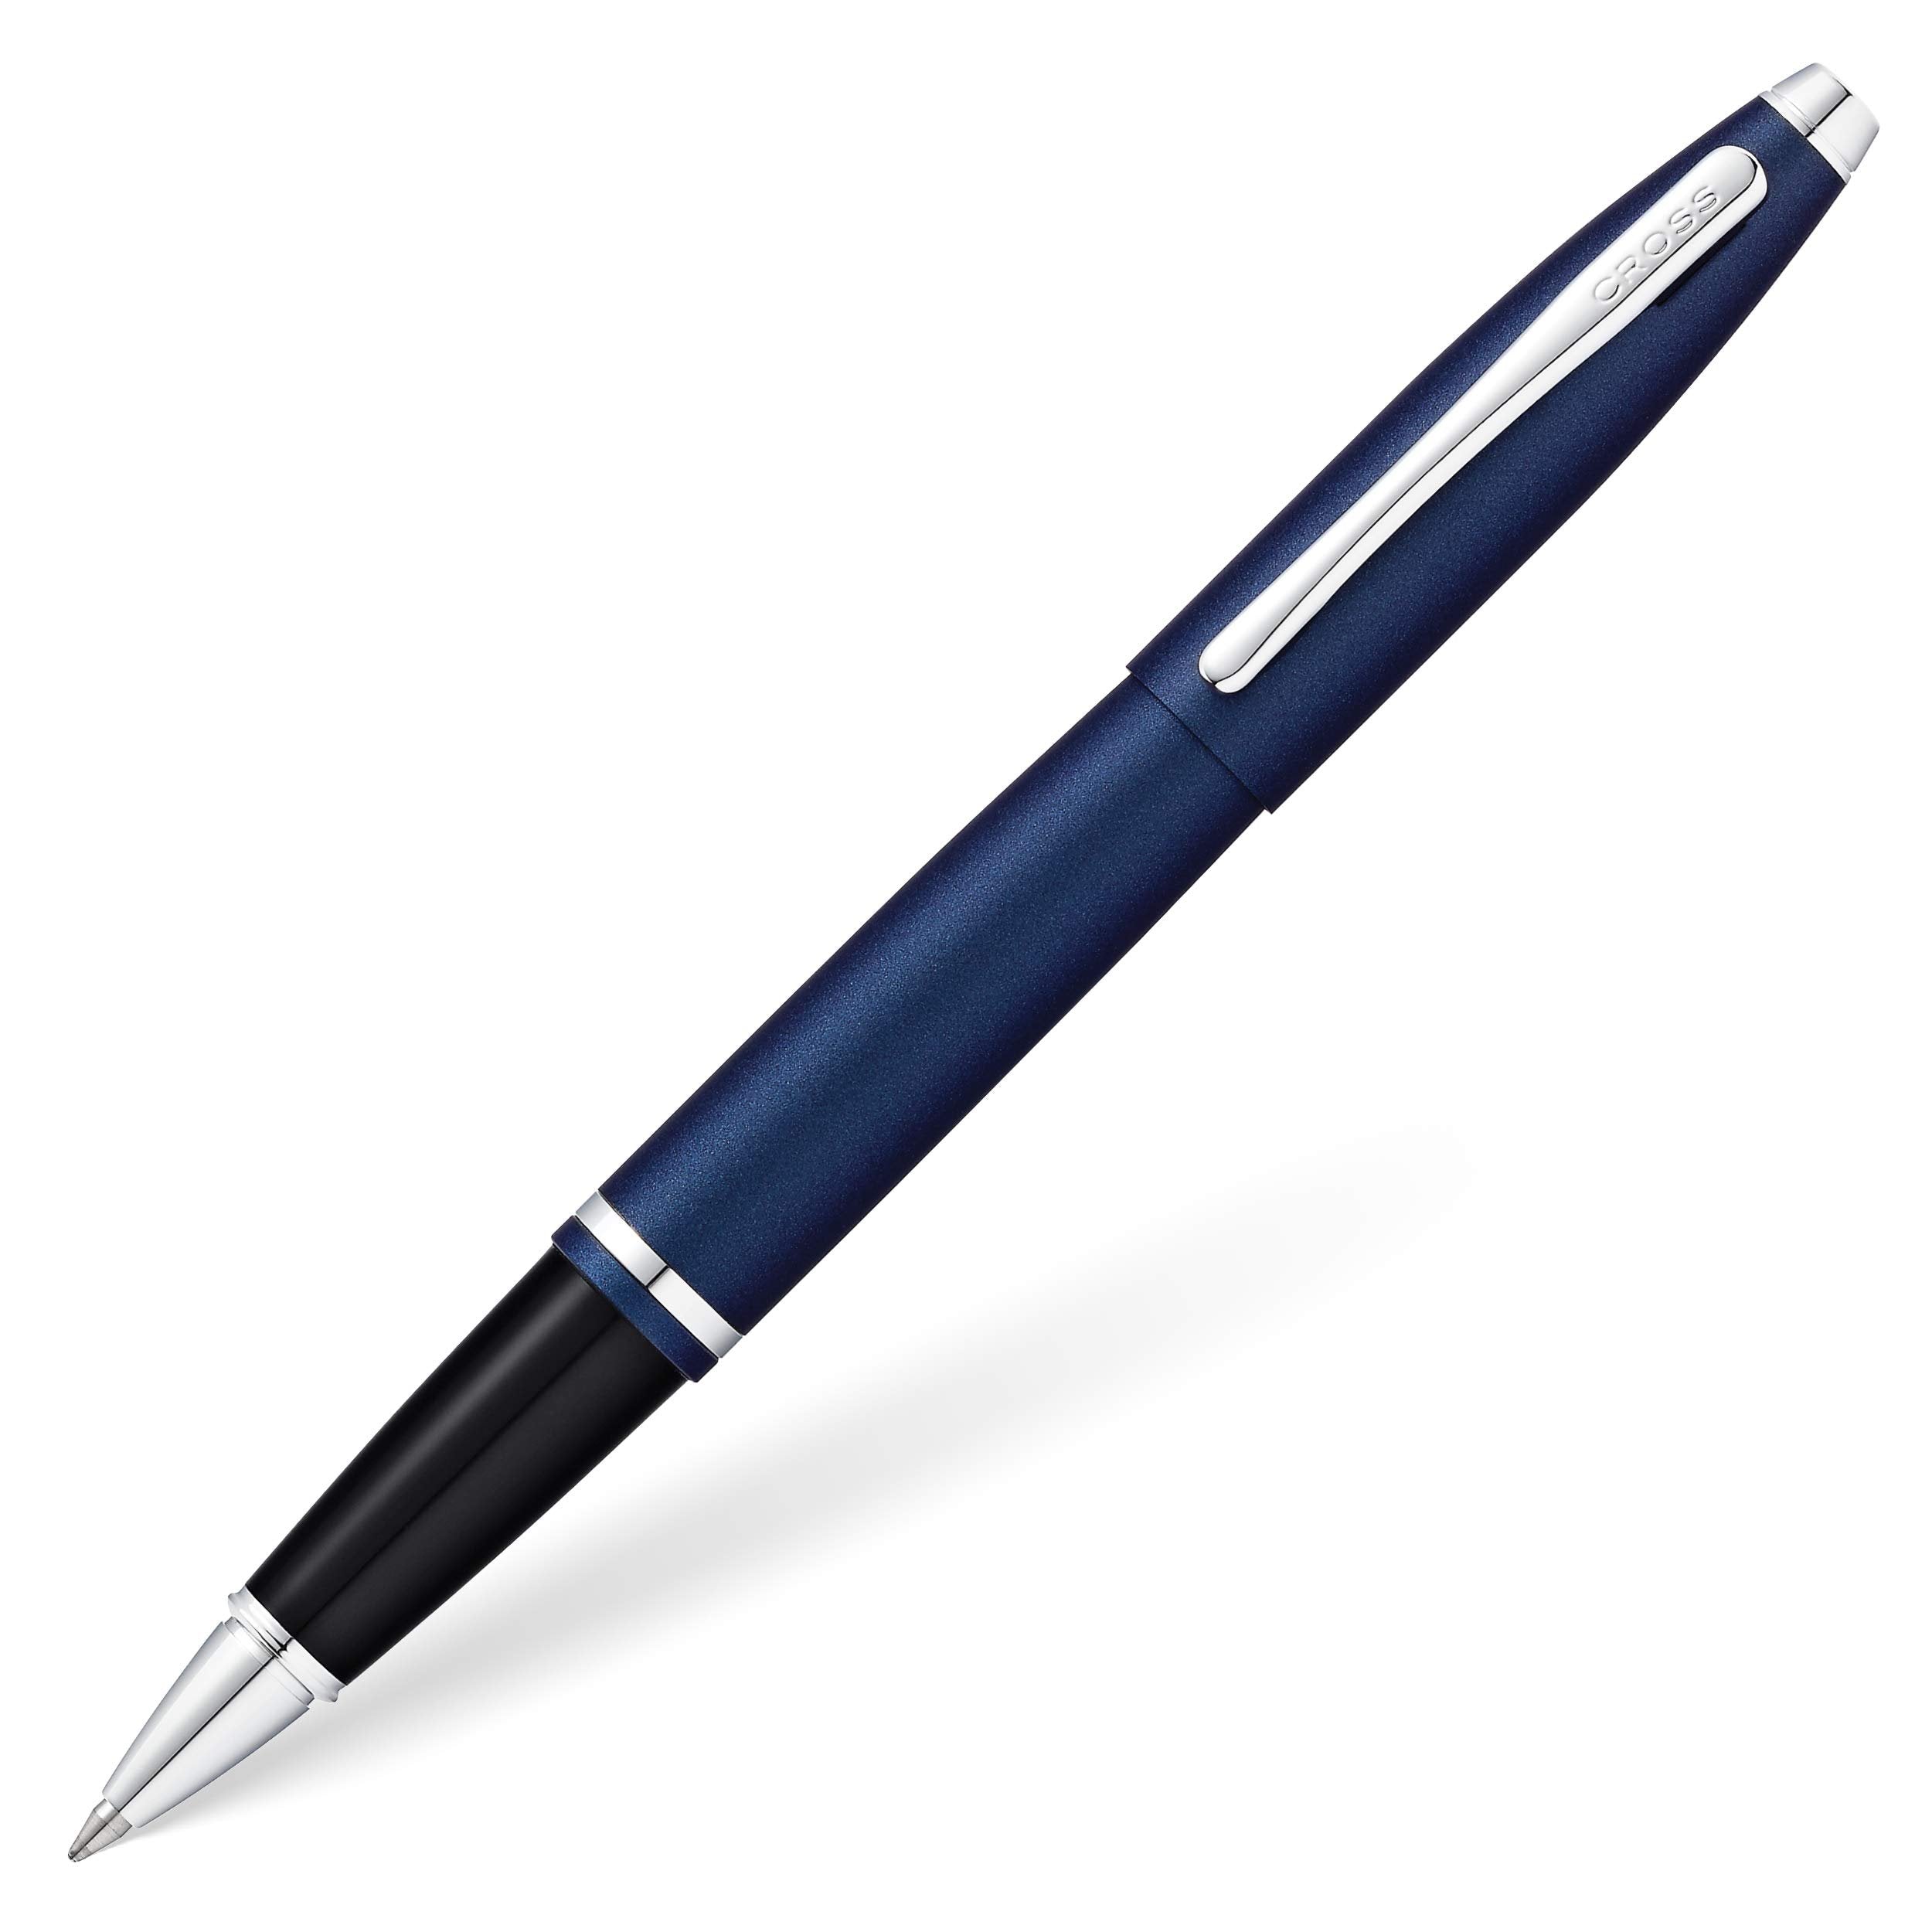 Cross Calais Refillable Gel Ink Rollerball Pen, Medium Rollerball, Includes Premium Gift Box - Matte Metallic Blue